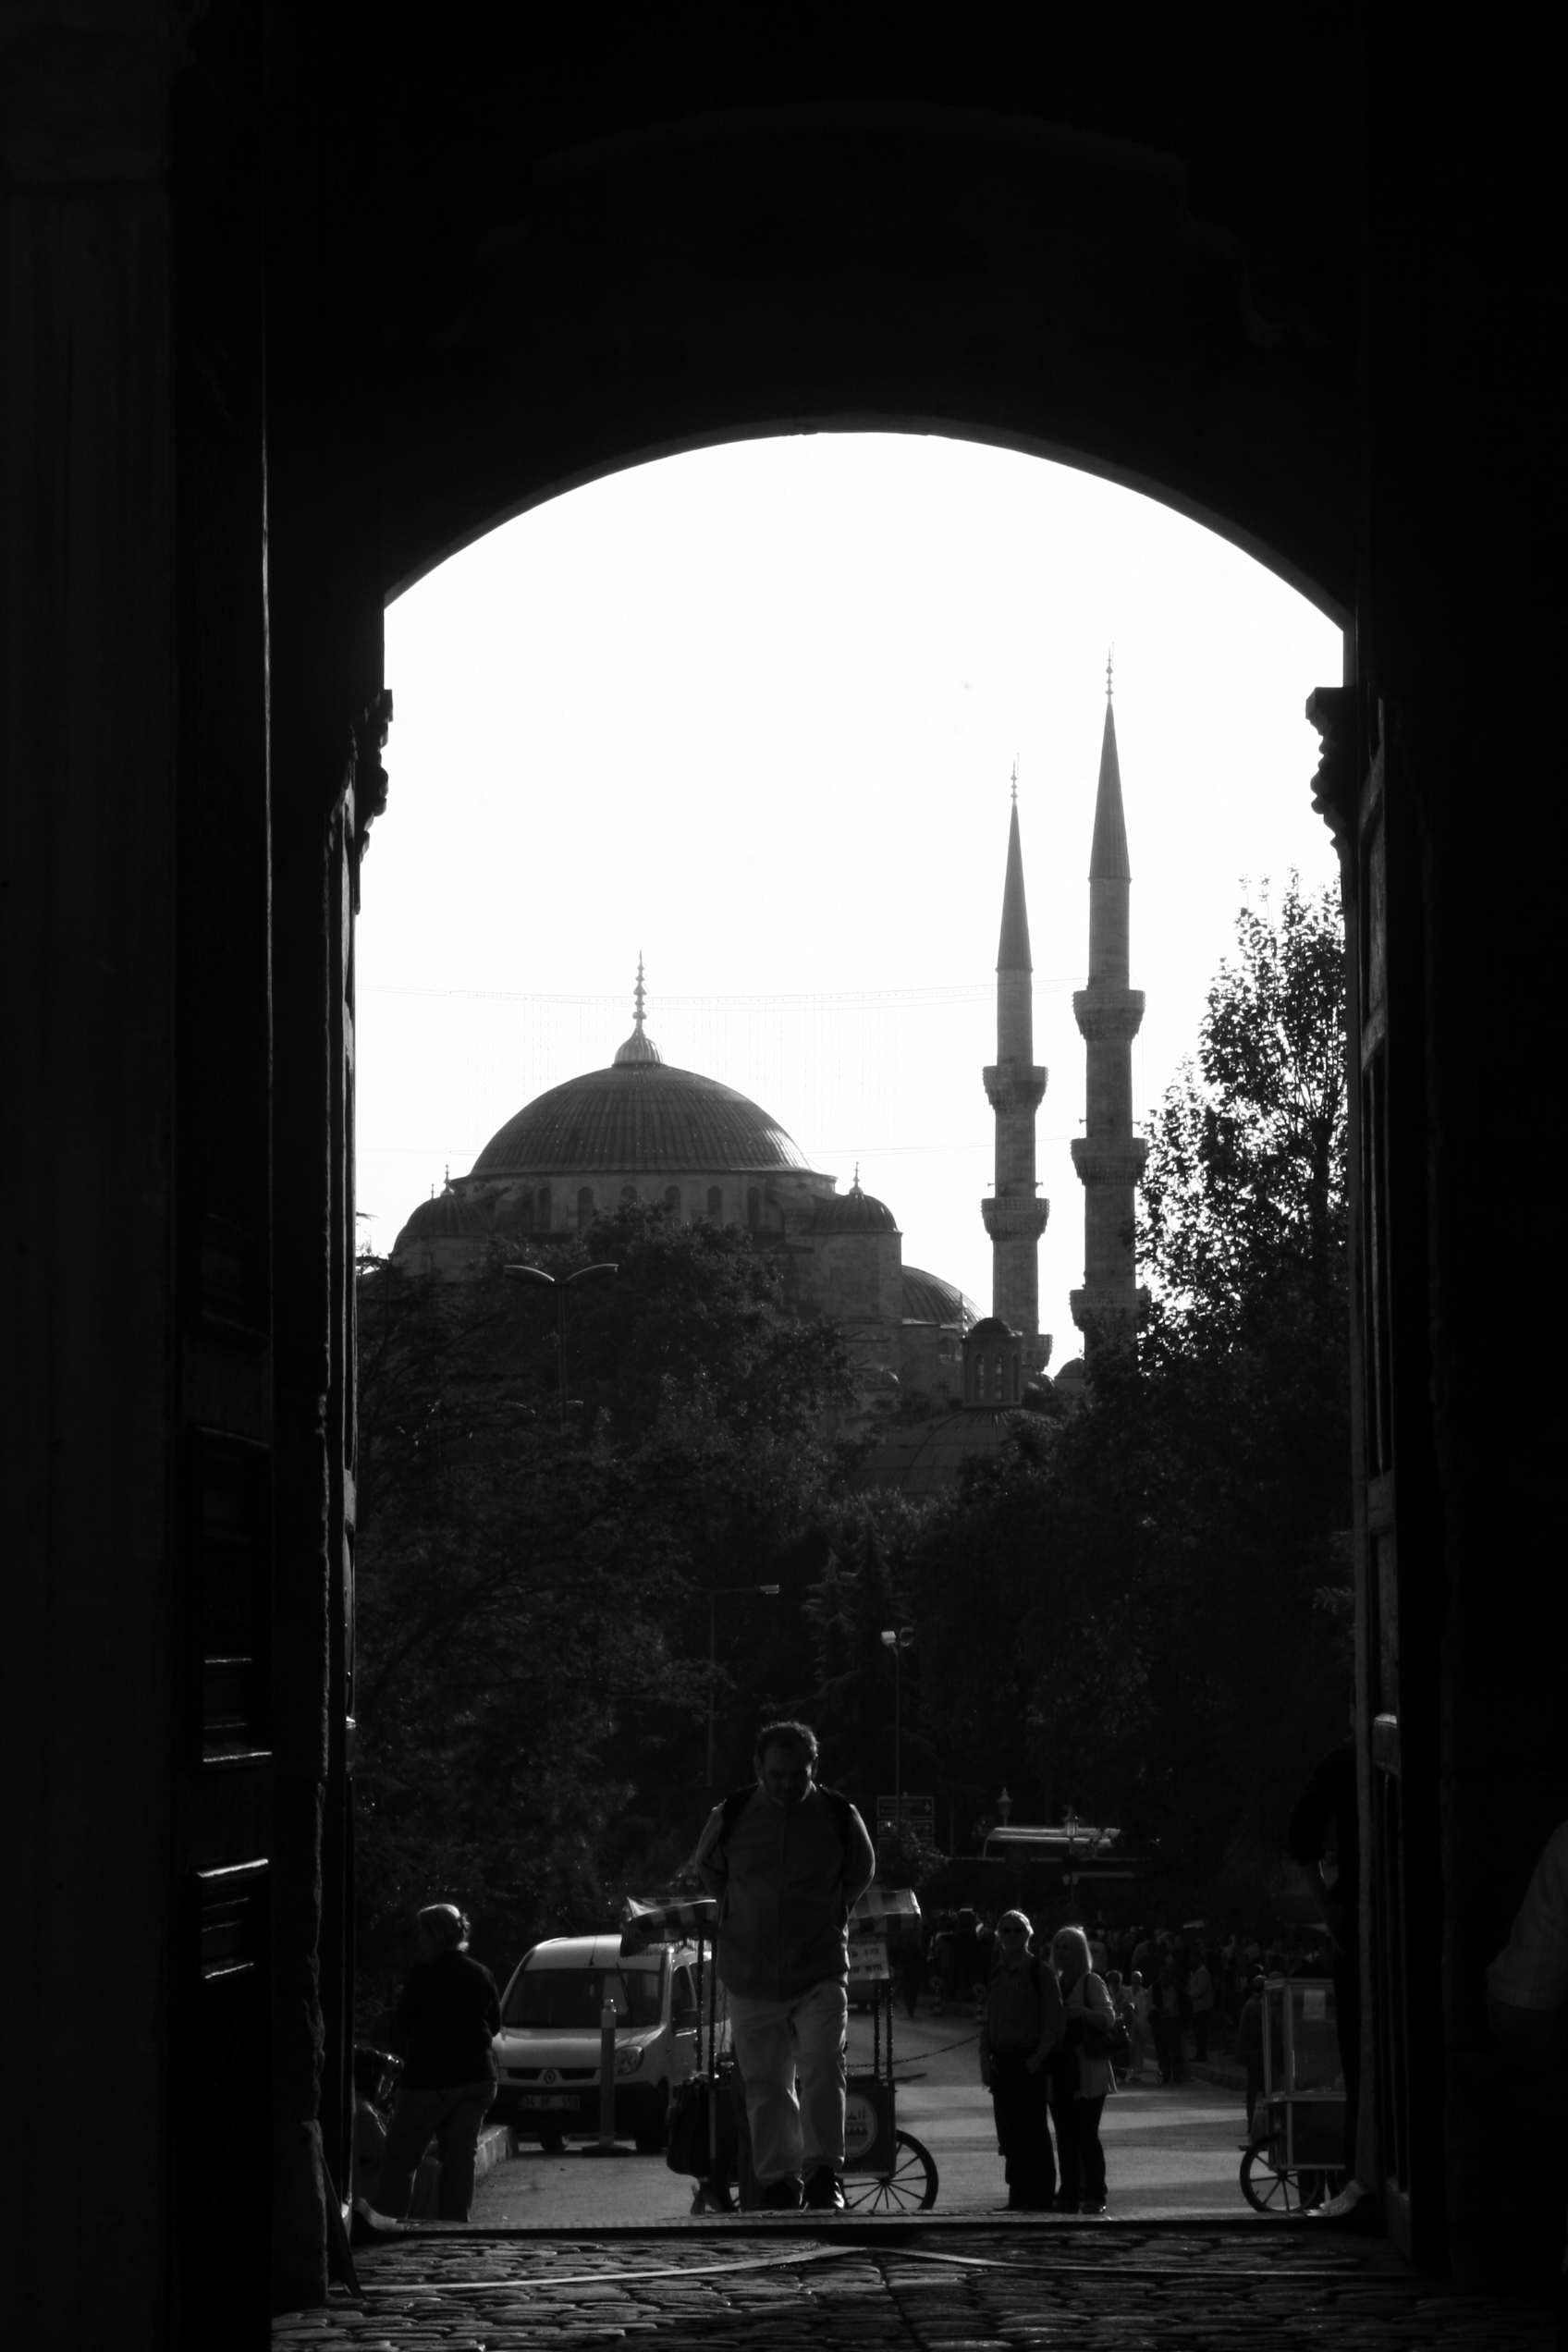 Istambul - Topkapi Palace Gate